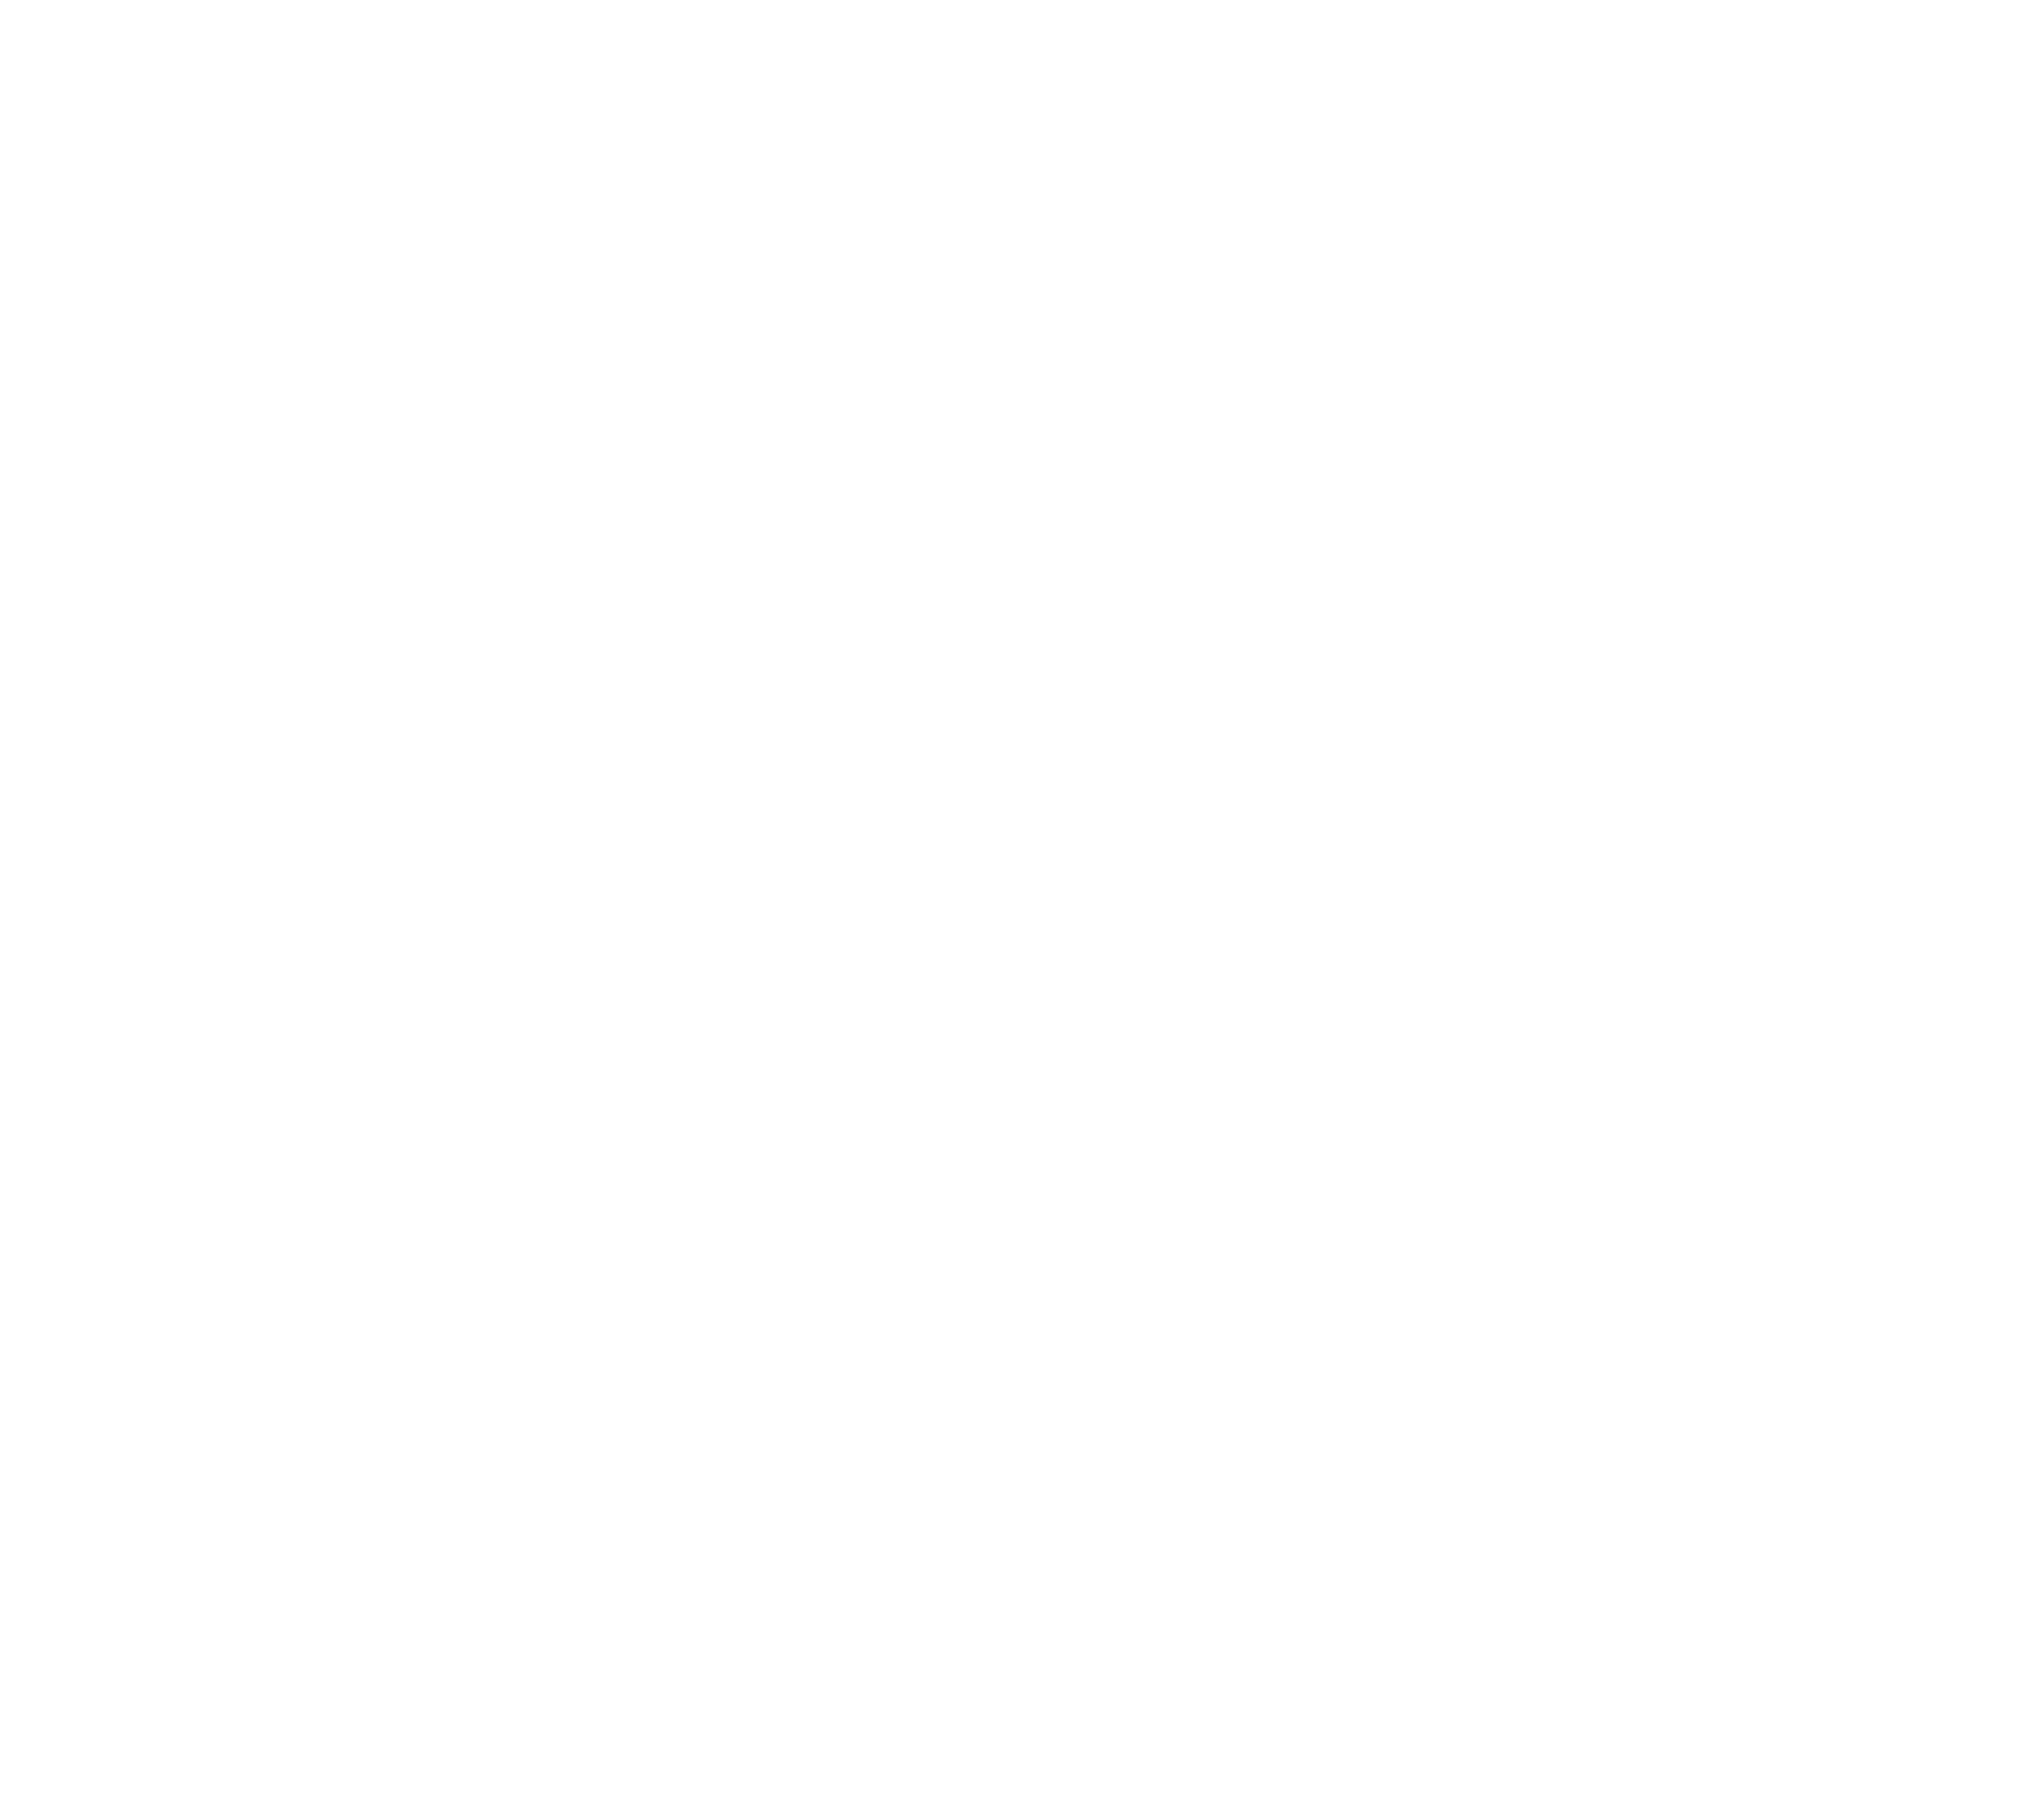 Lay’s